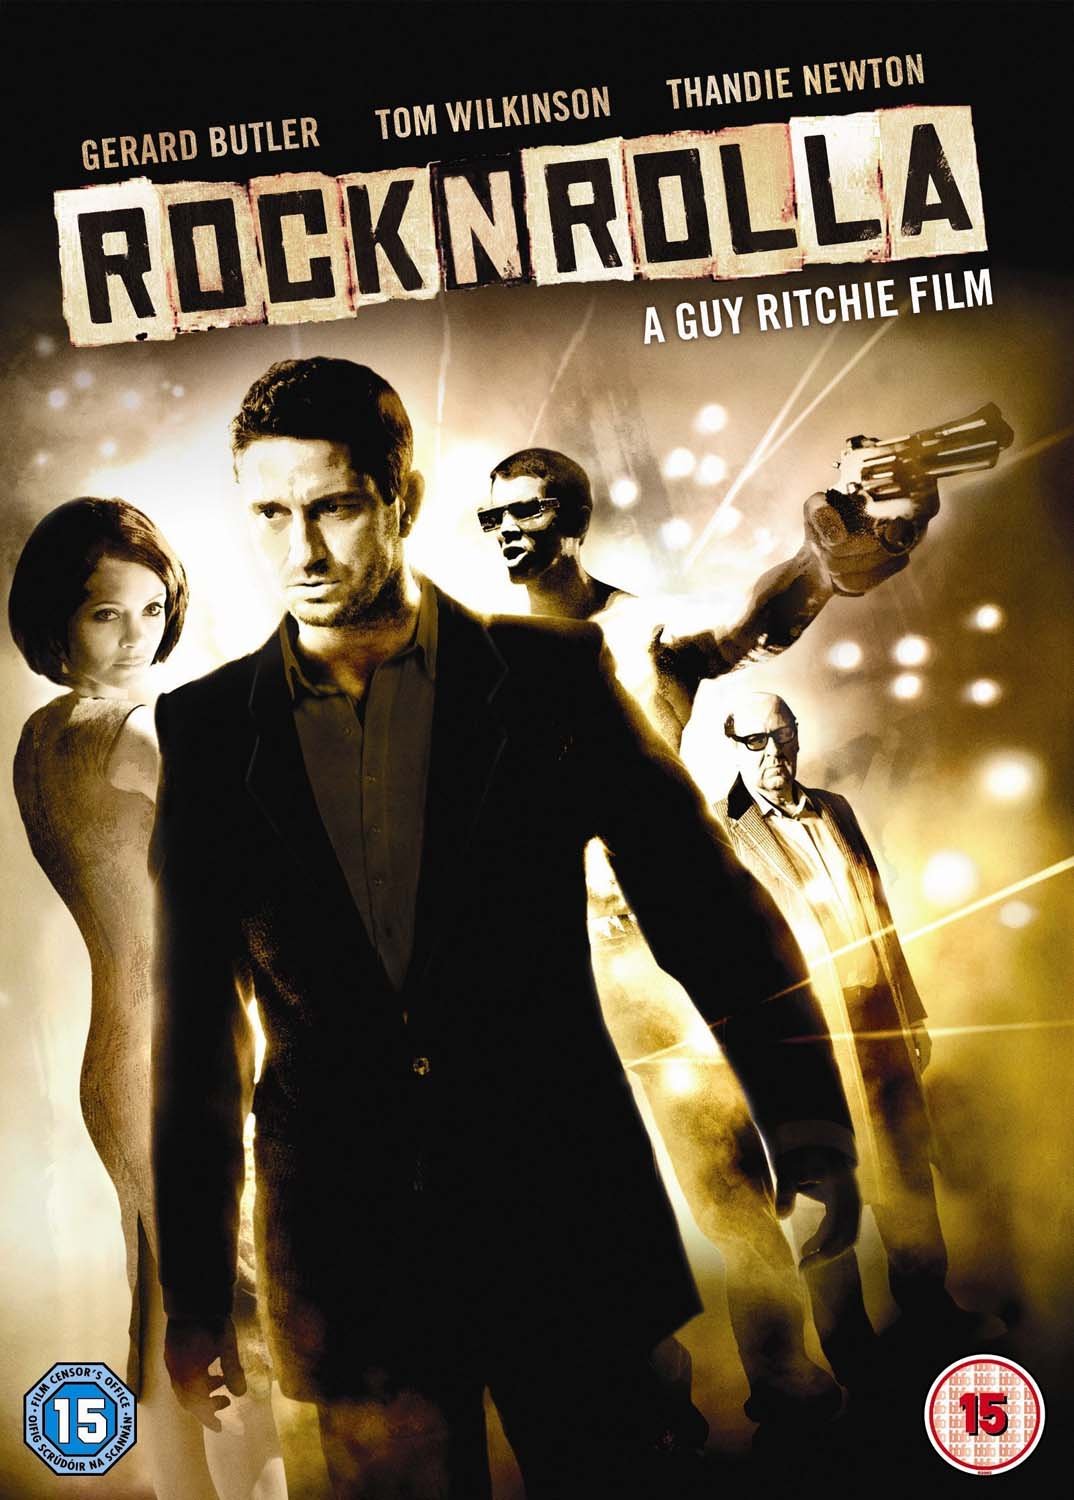 Stiahni si Blu-ray Filmy RocknRolla (2008)(CZ/EN)[1080p] = CSFD 77%